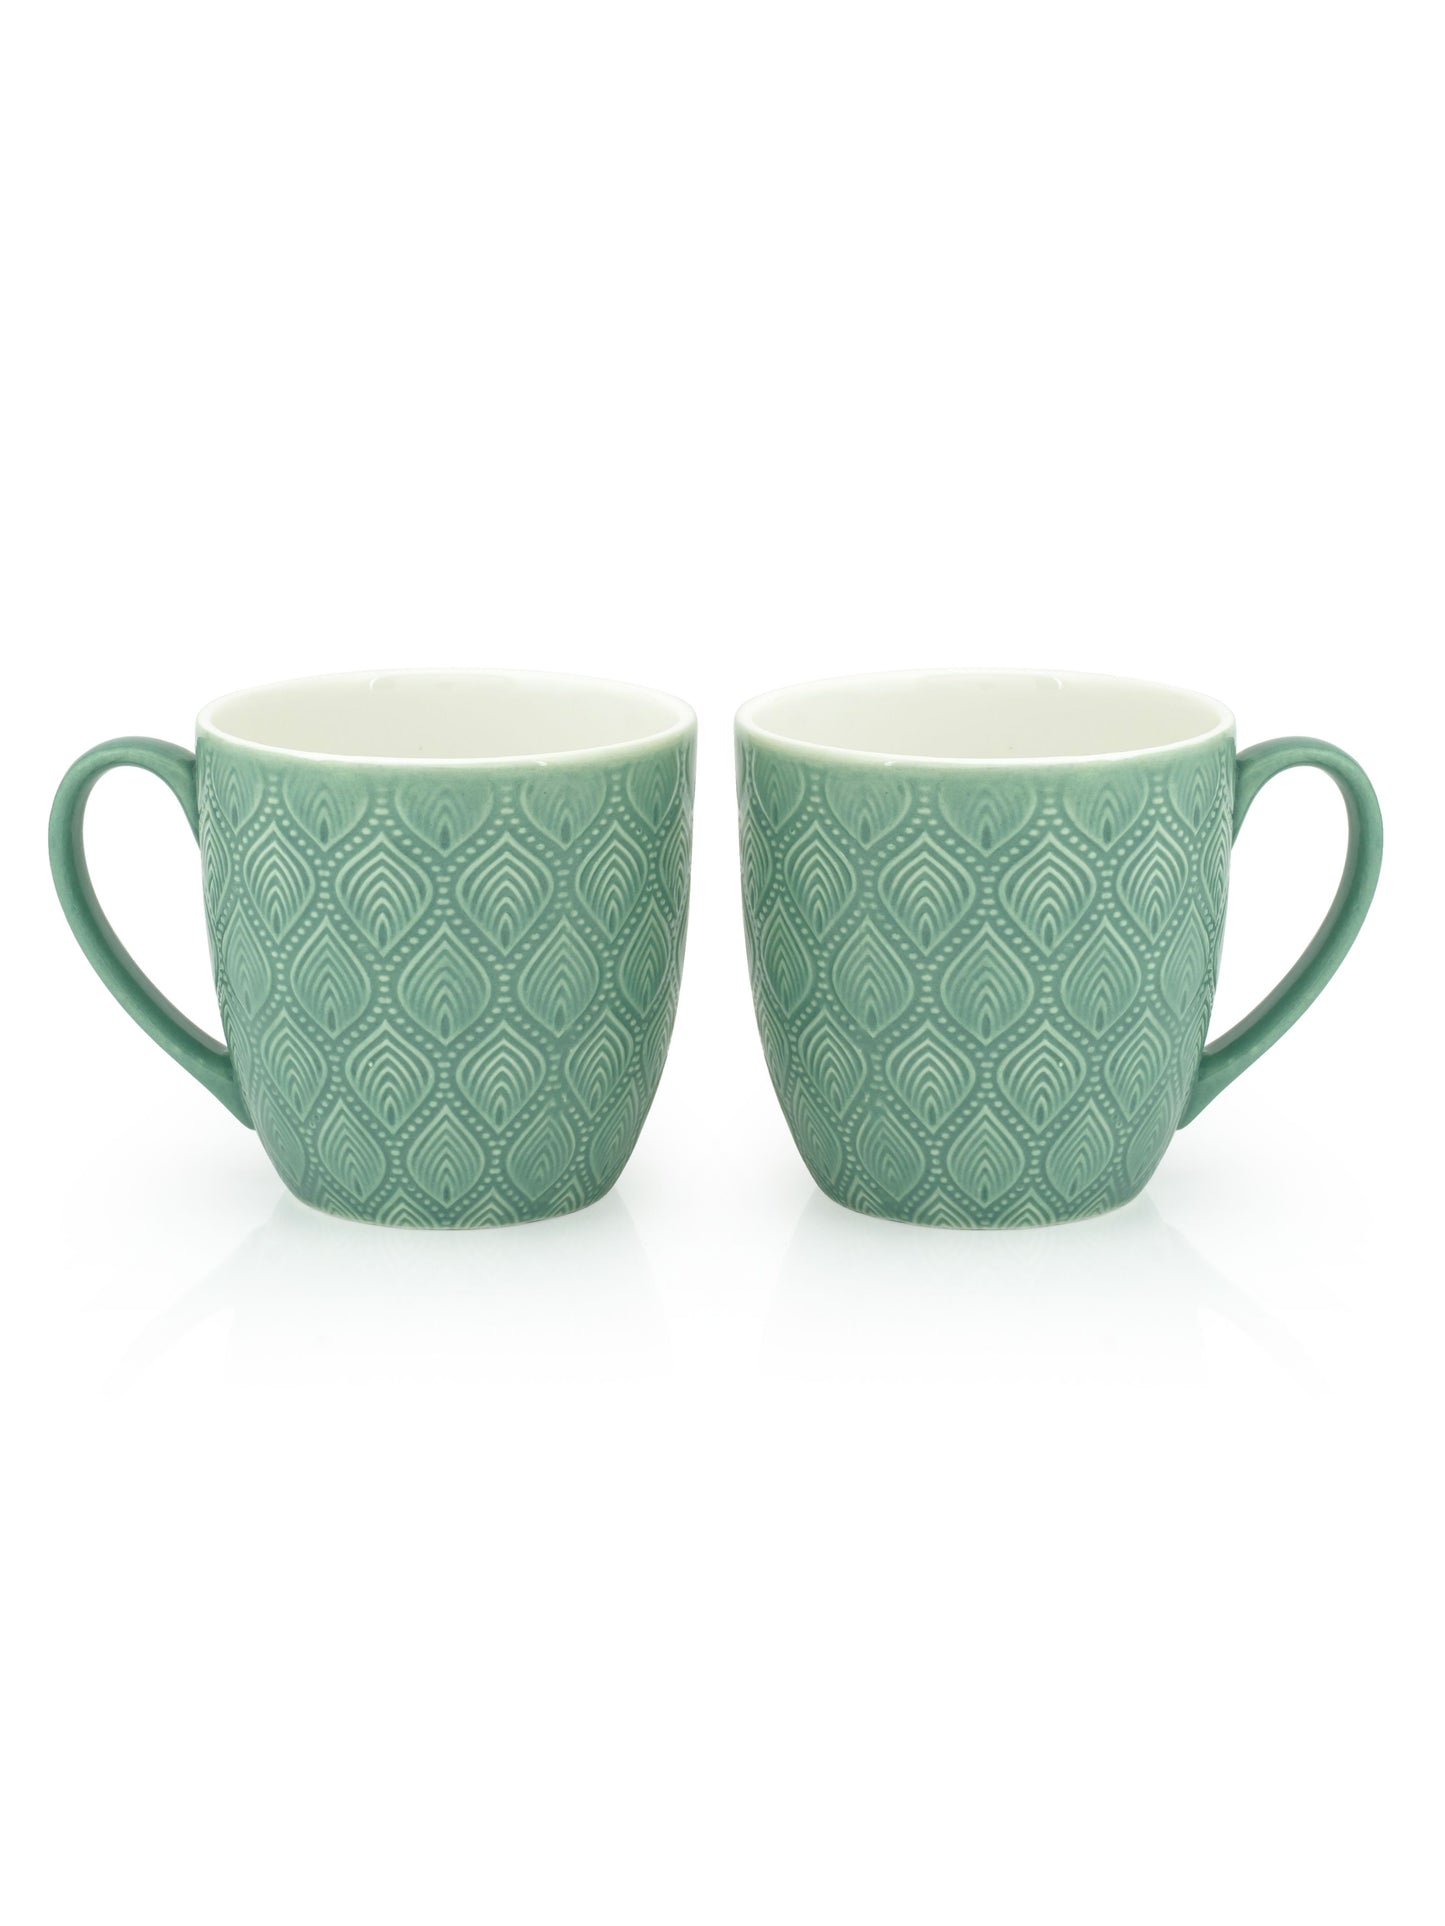 JCPL Feast Kohinoor Coffee & Tea Mug Set of 6 (Green)